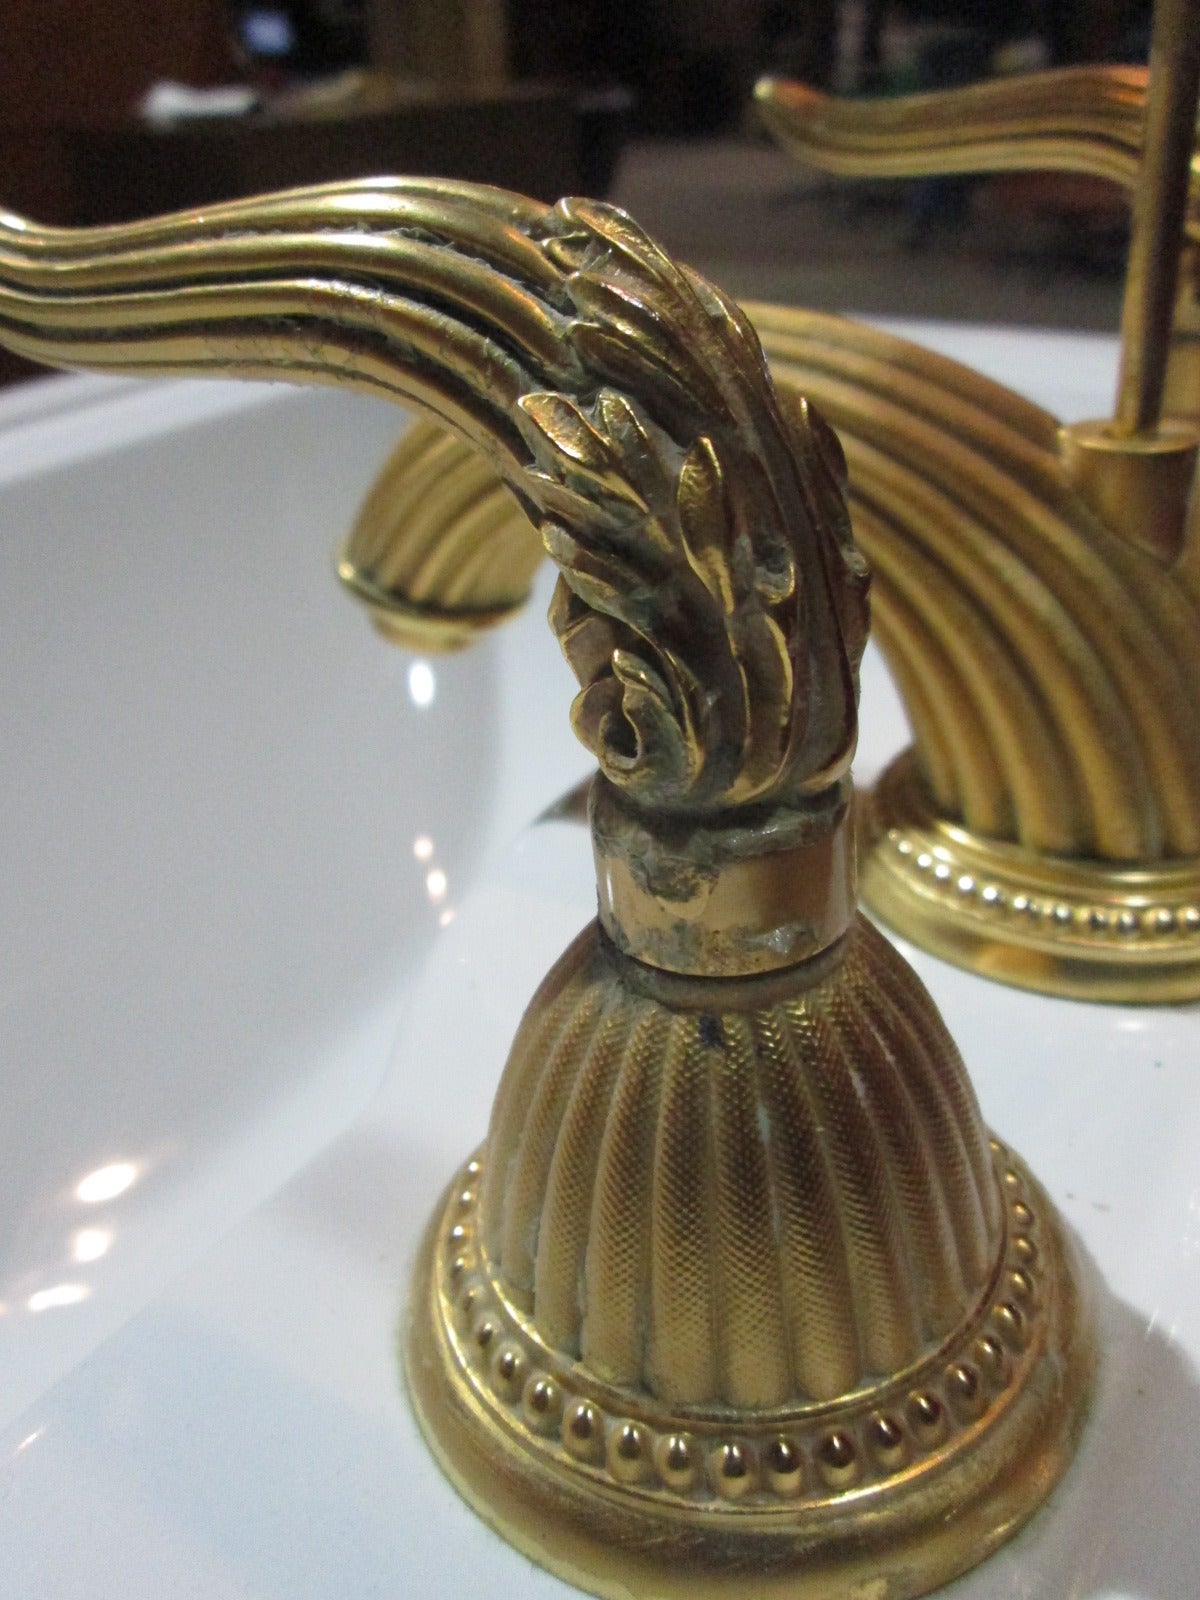 Italian Pedestal Porcelain Sink with Gold Fixtures 1